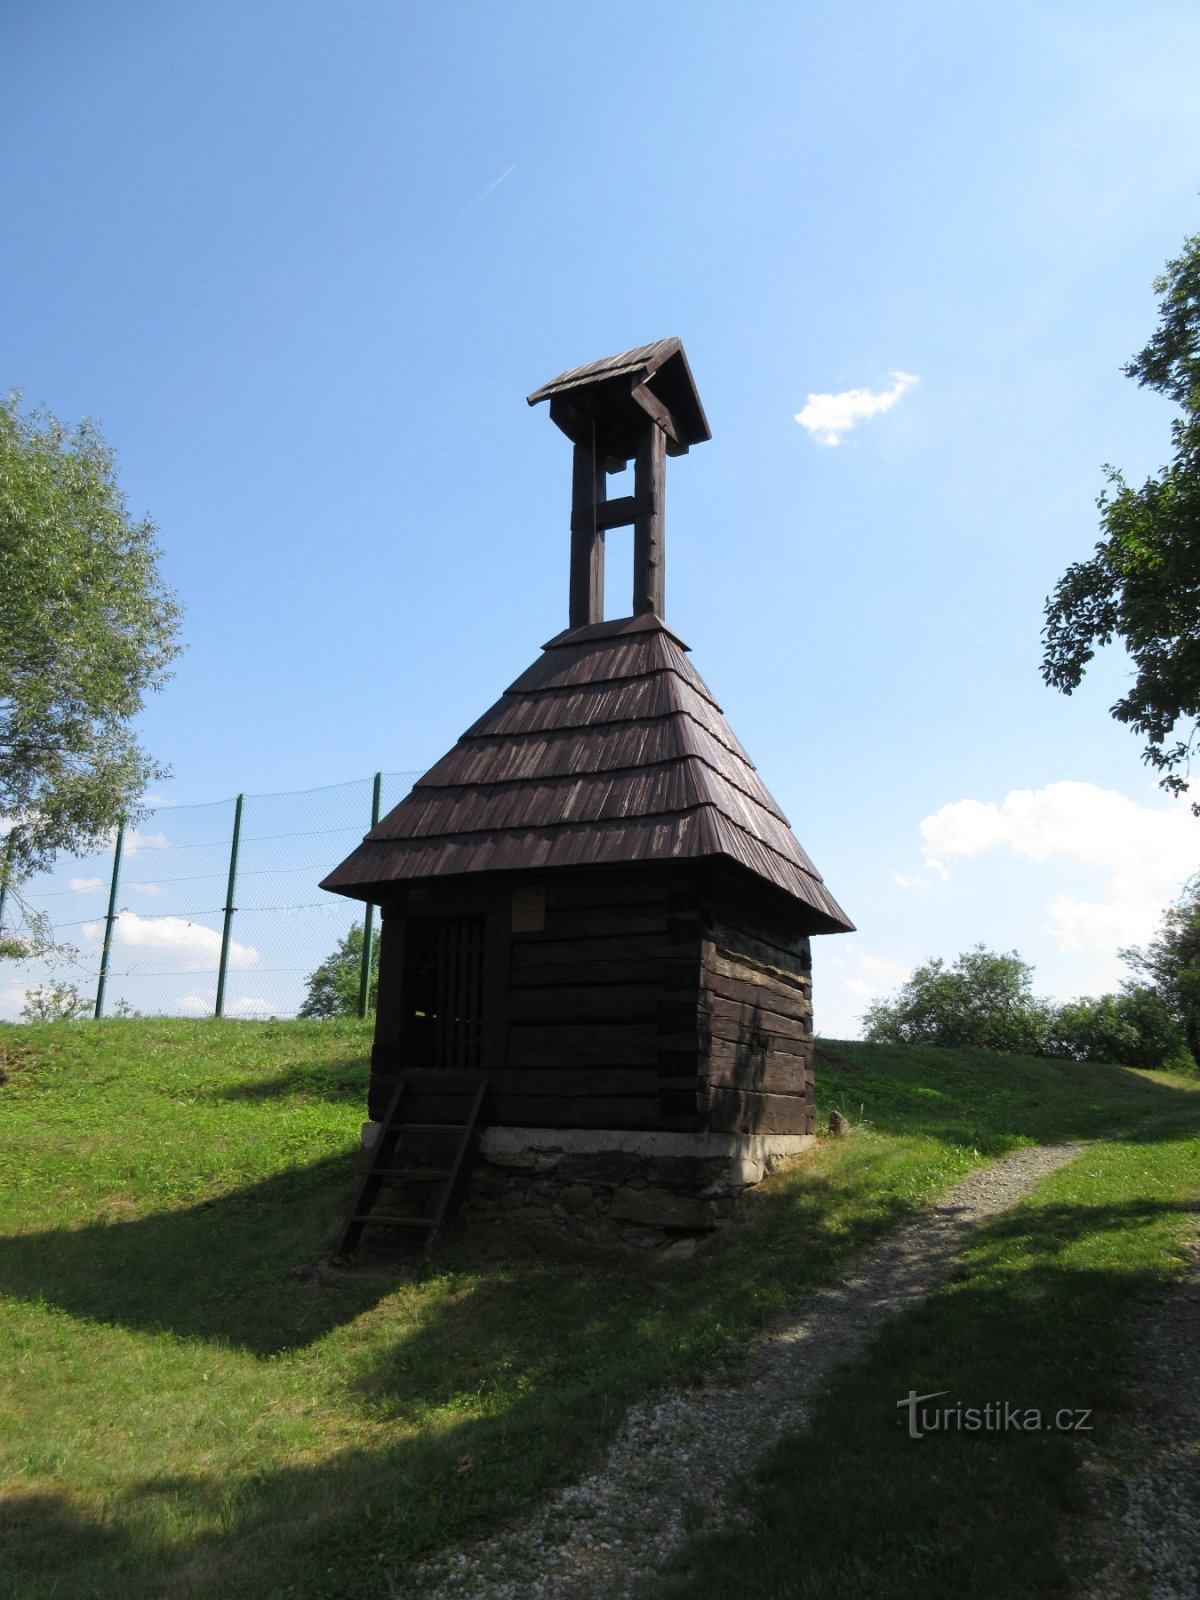 Borek - Kozojedy (Pilsen-norte) e as casas de madeira de lá